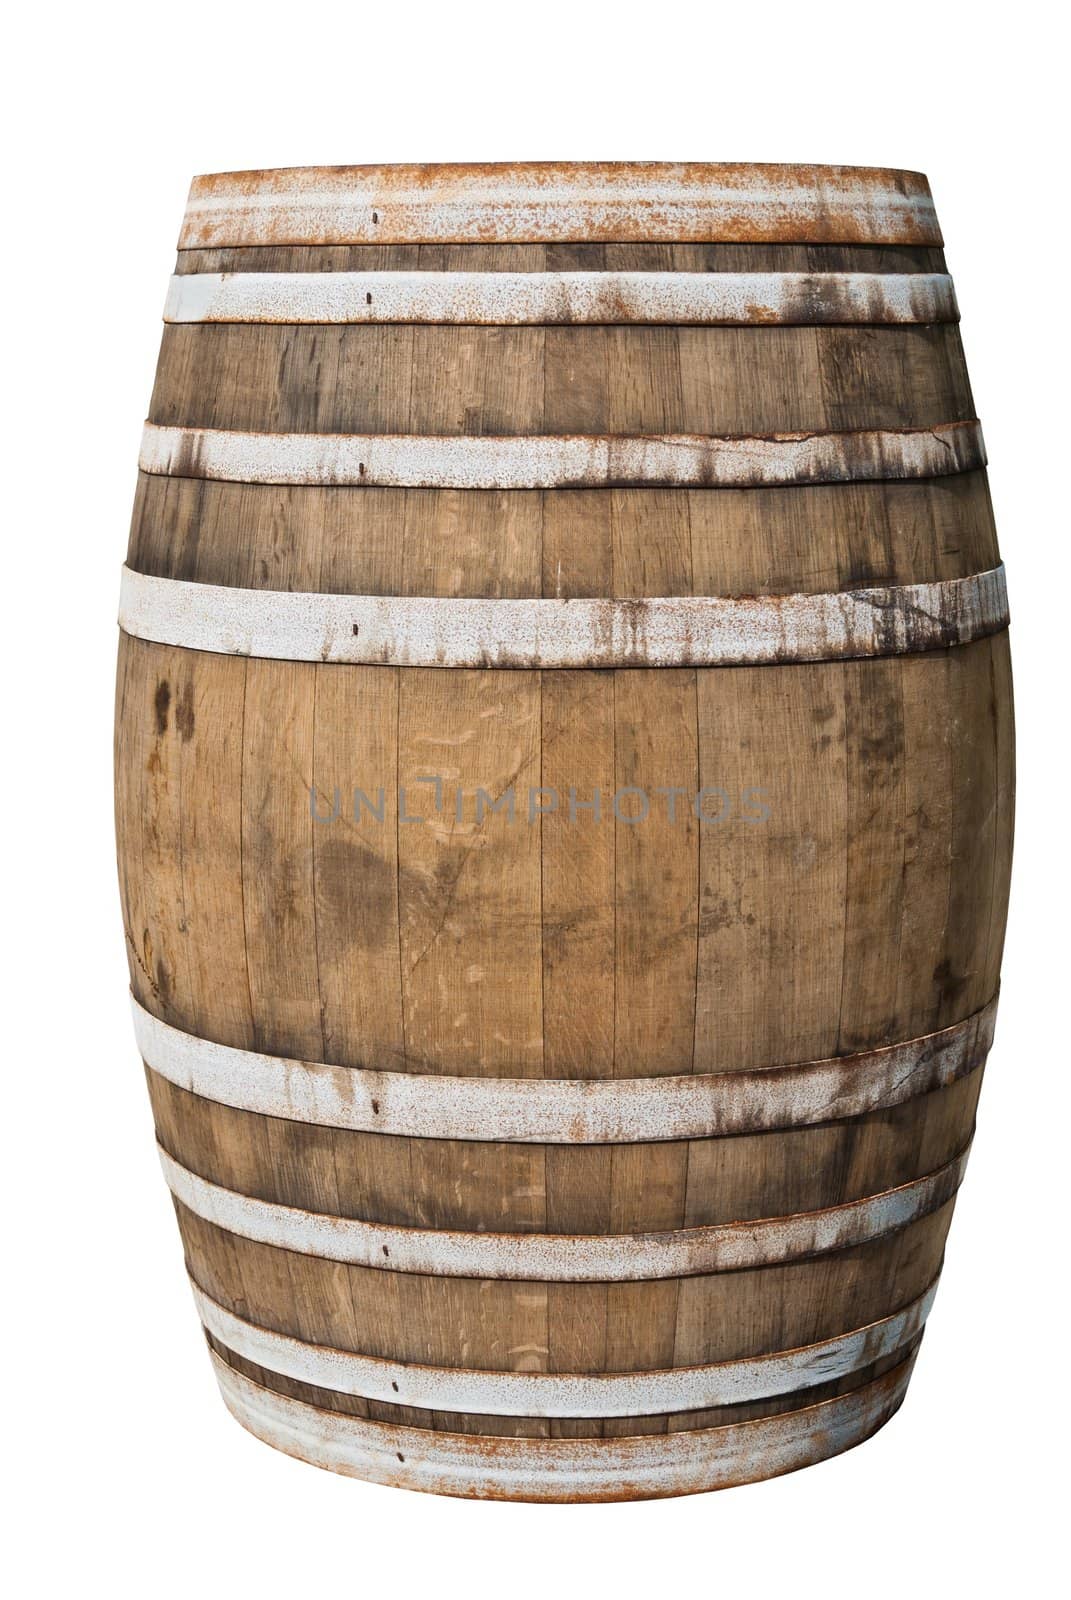 Big old wine barrel by sasilsolutions